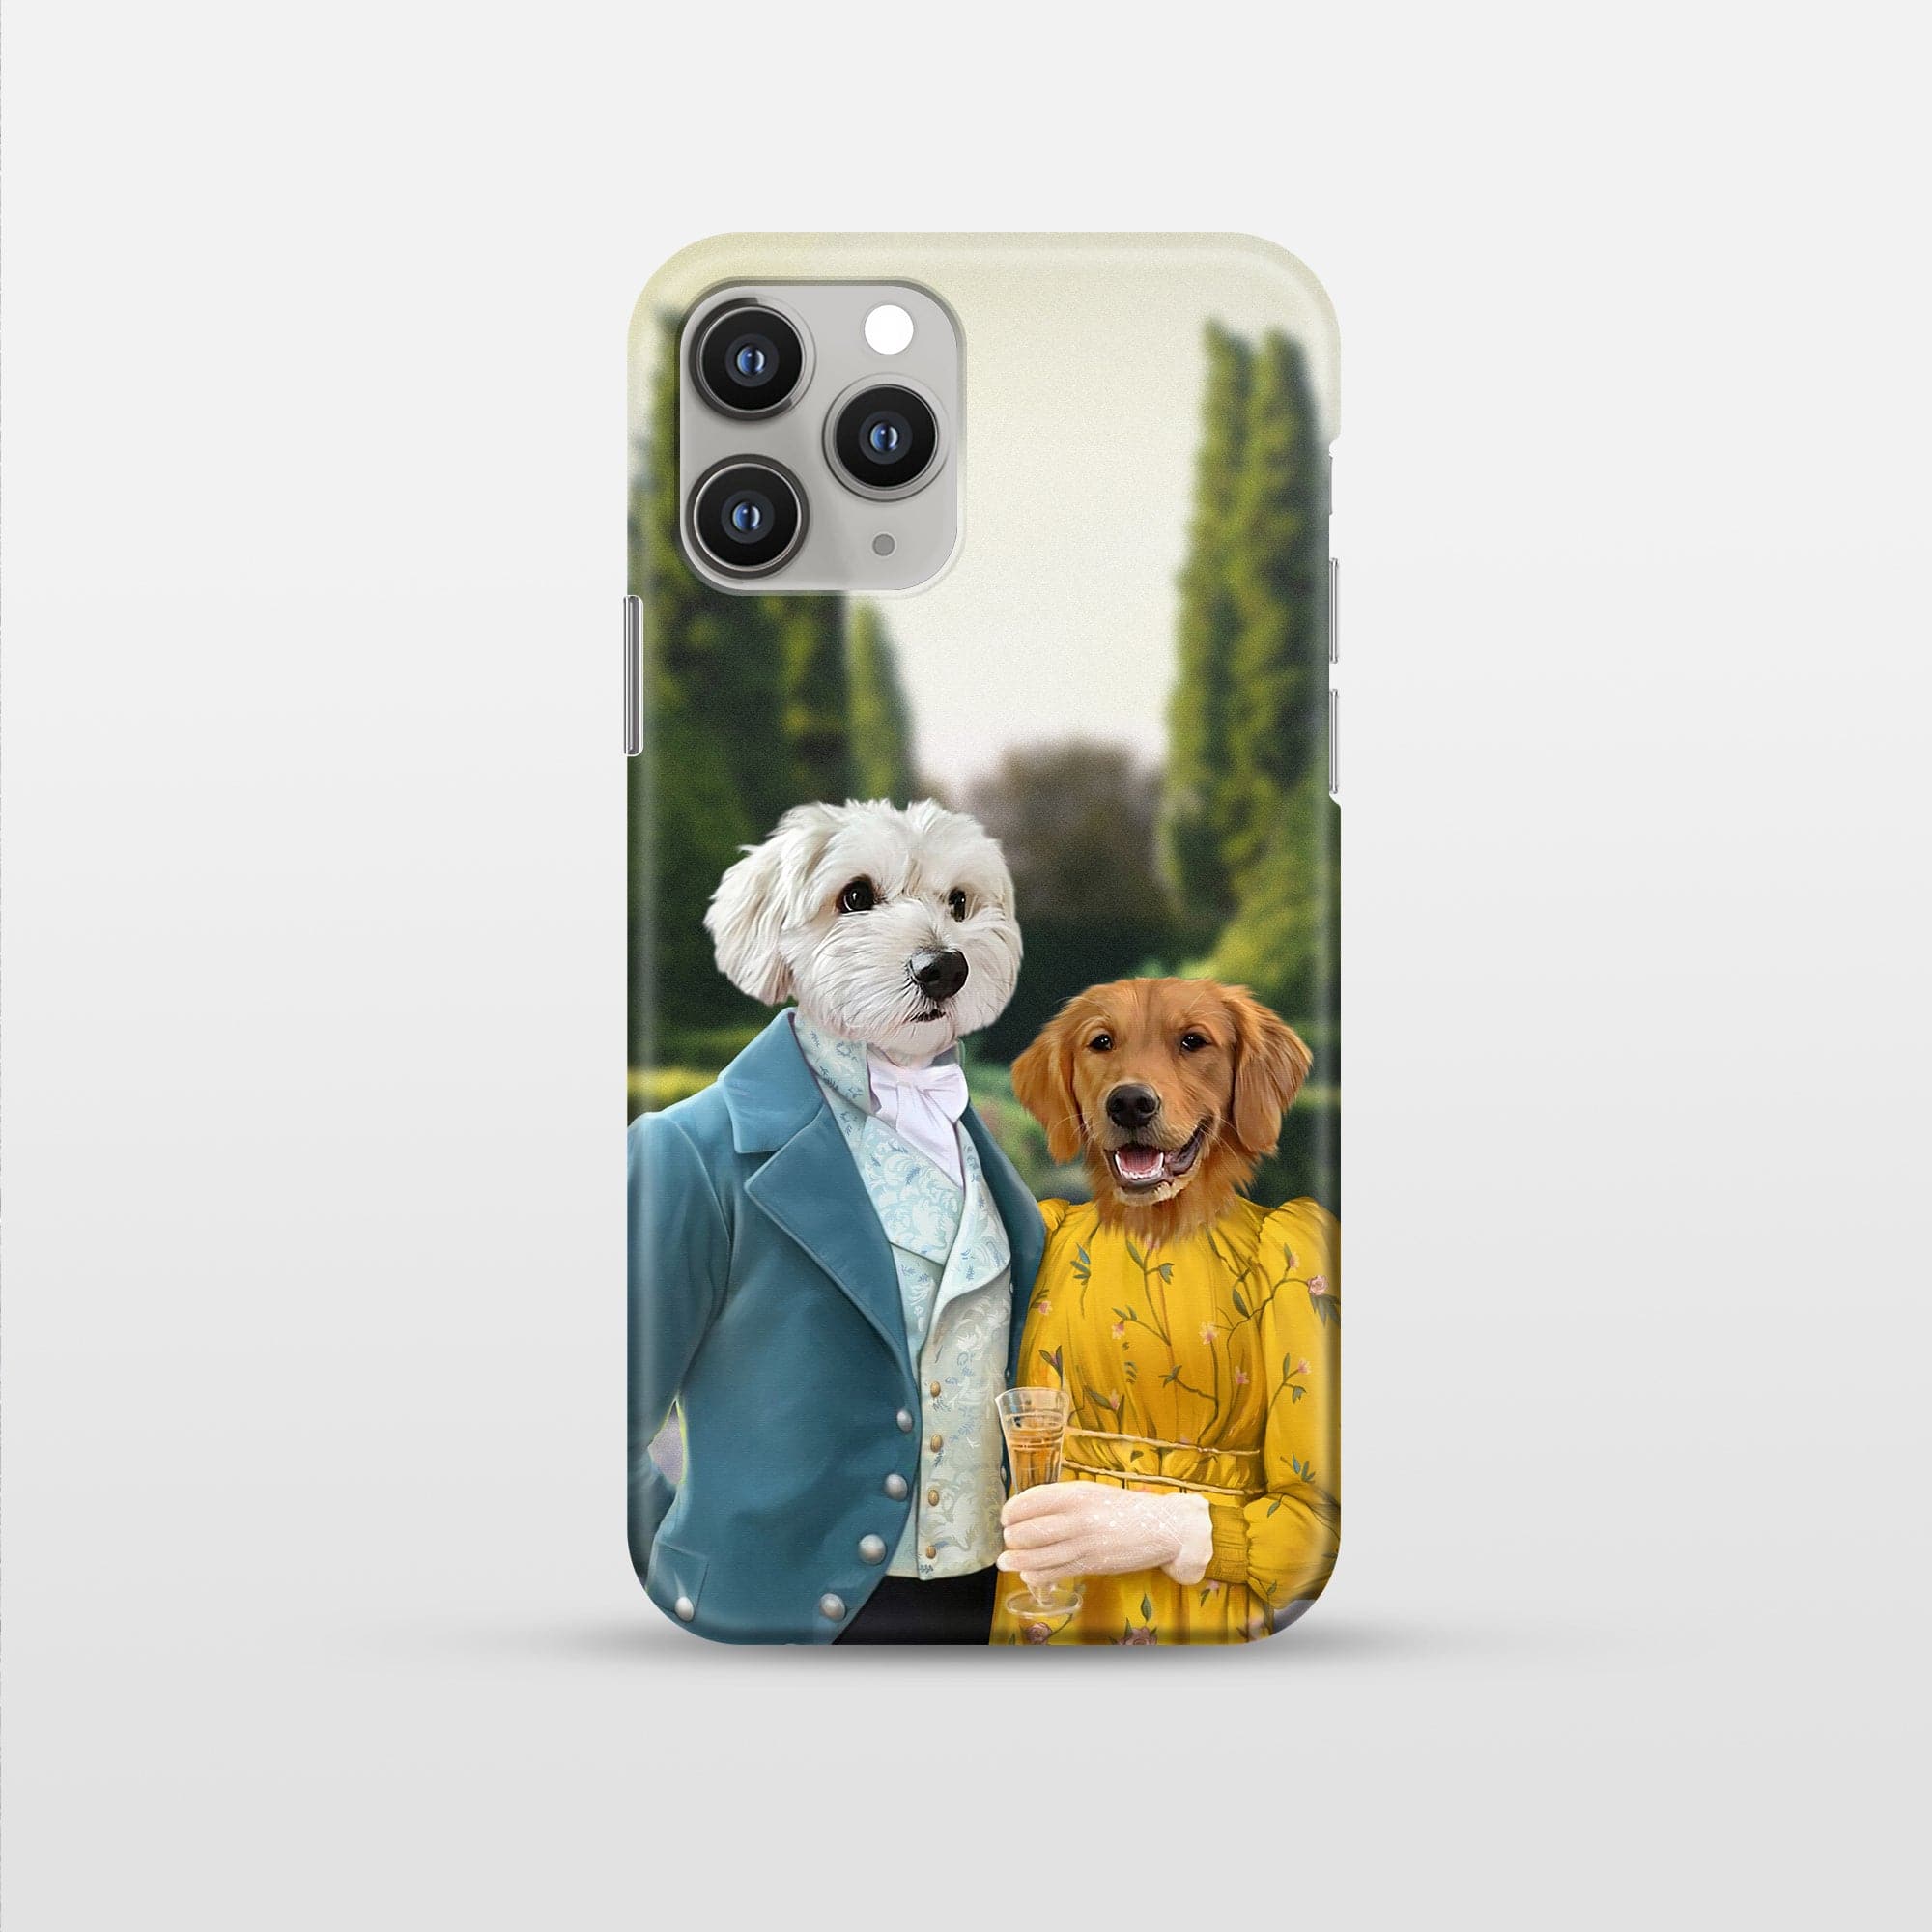 Colin and Marina - Custom Pet Phone Case